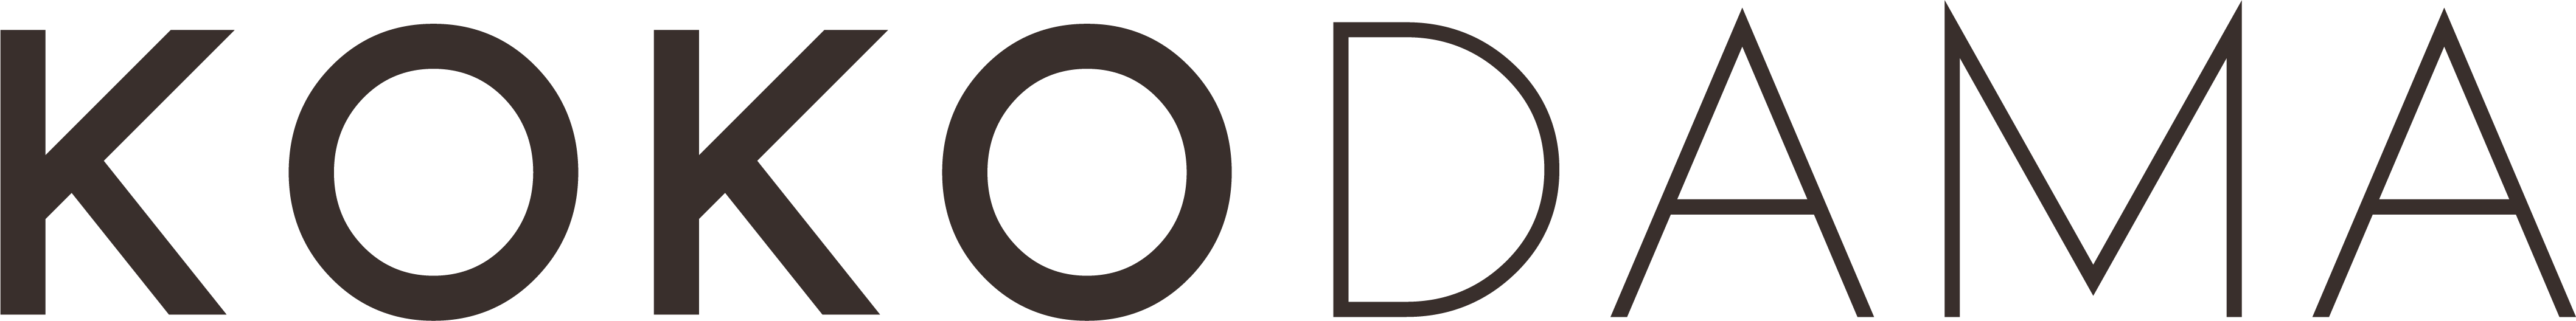 Kokodama logo